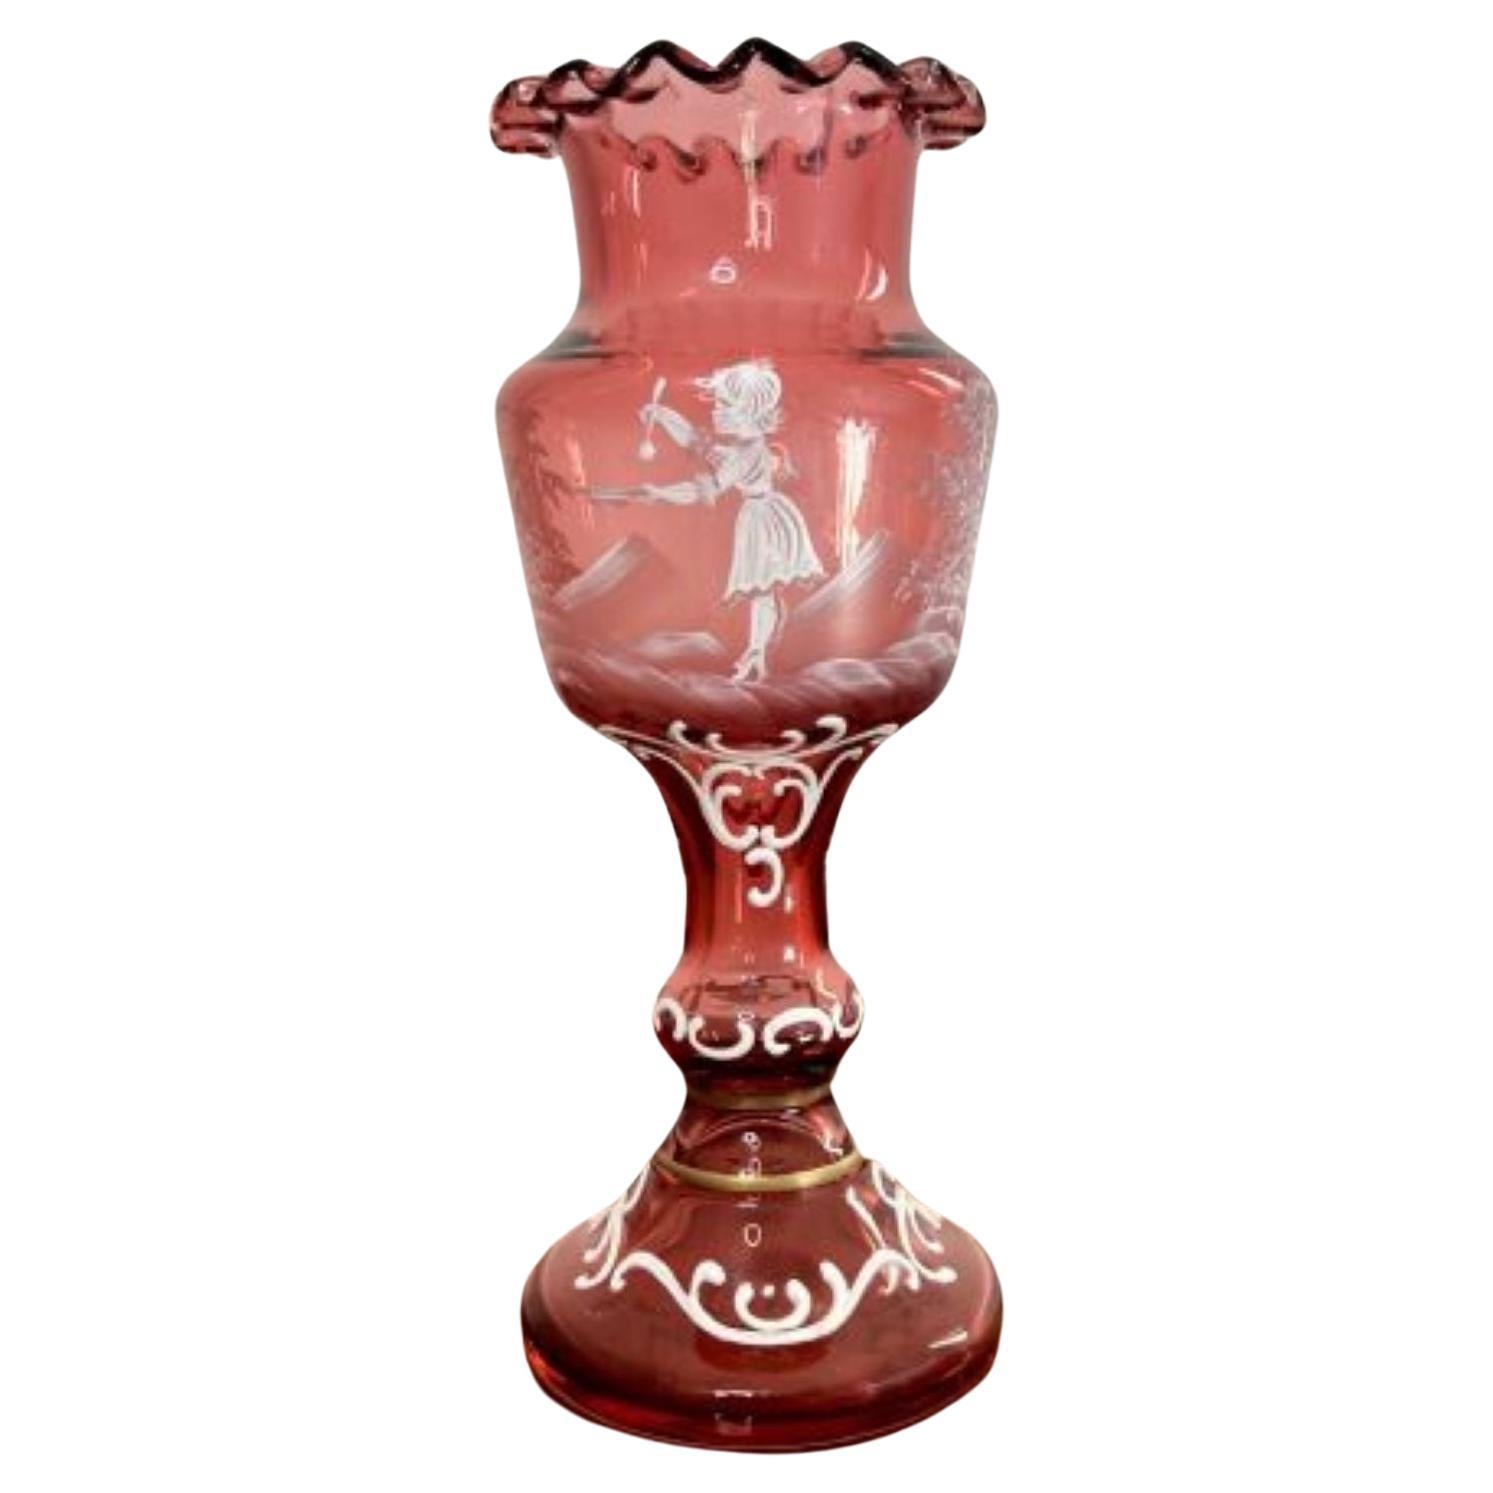 Large unusual shaped antique Mary Gregory vase 